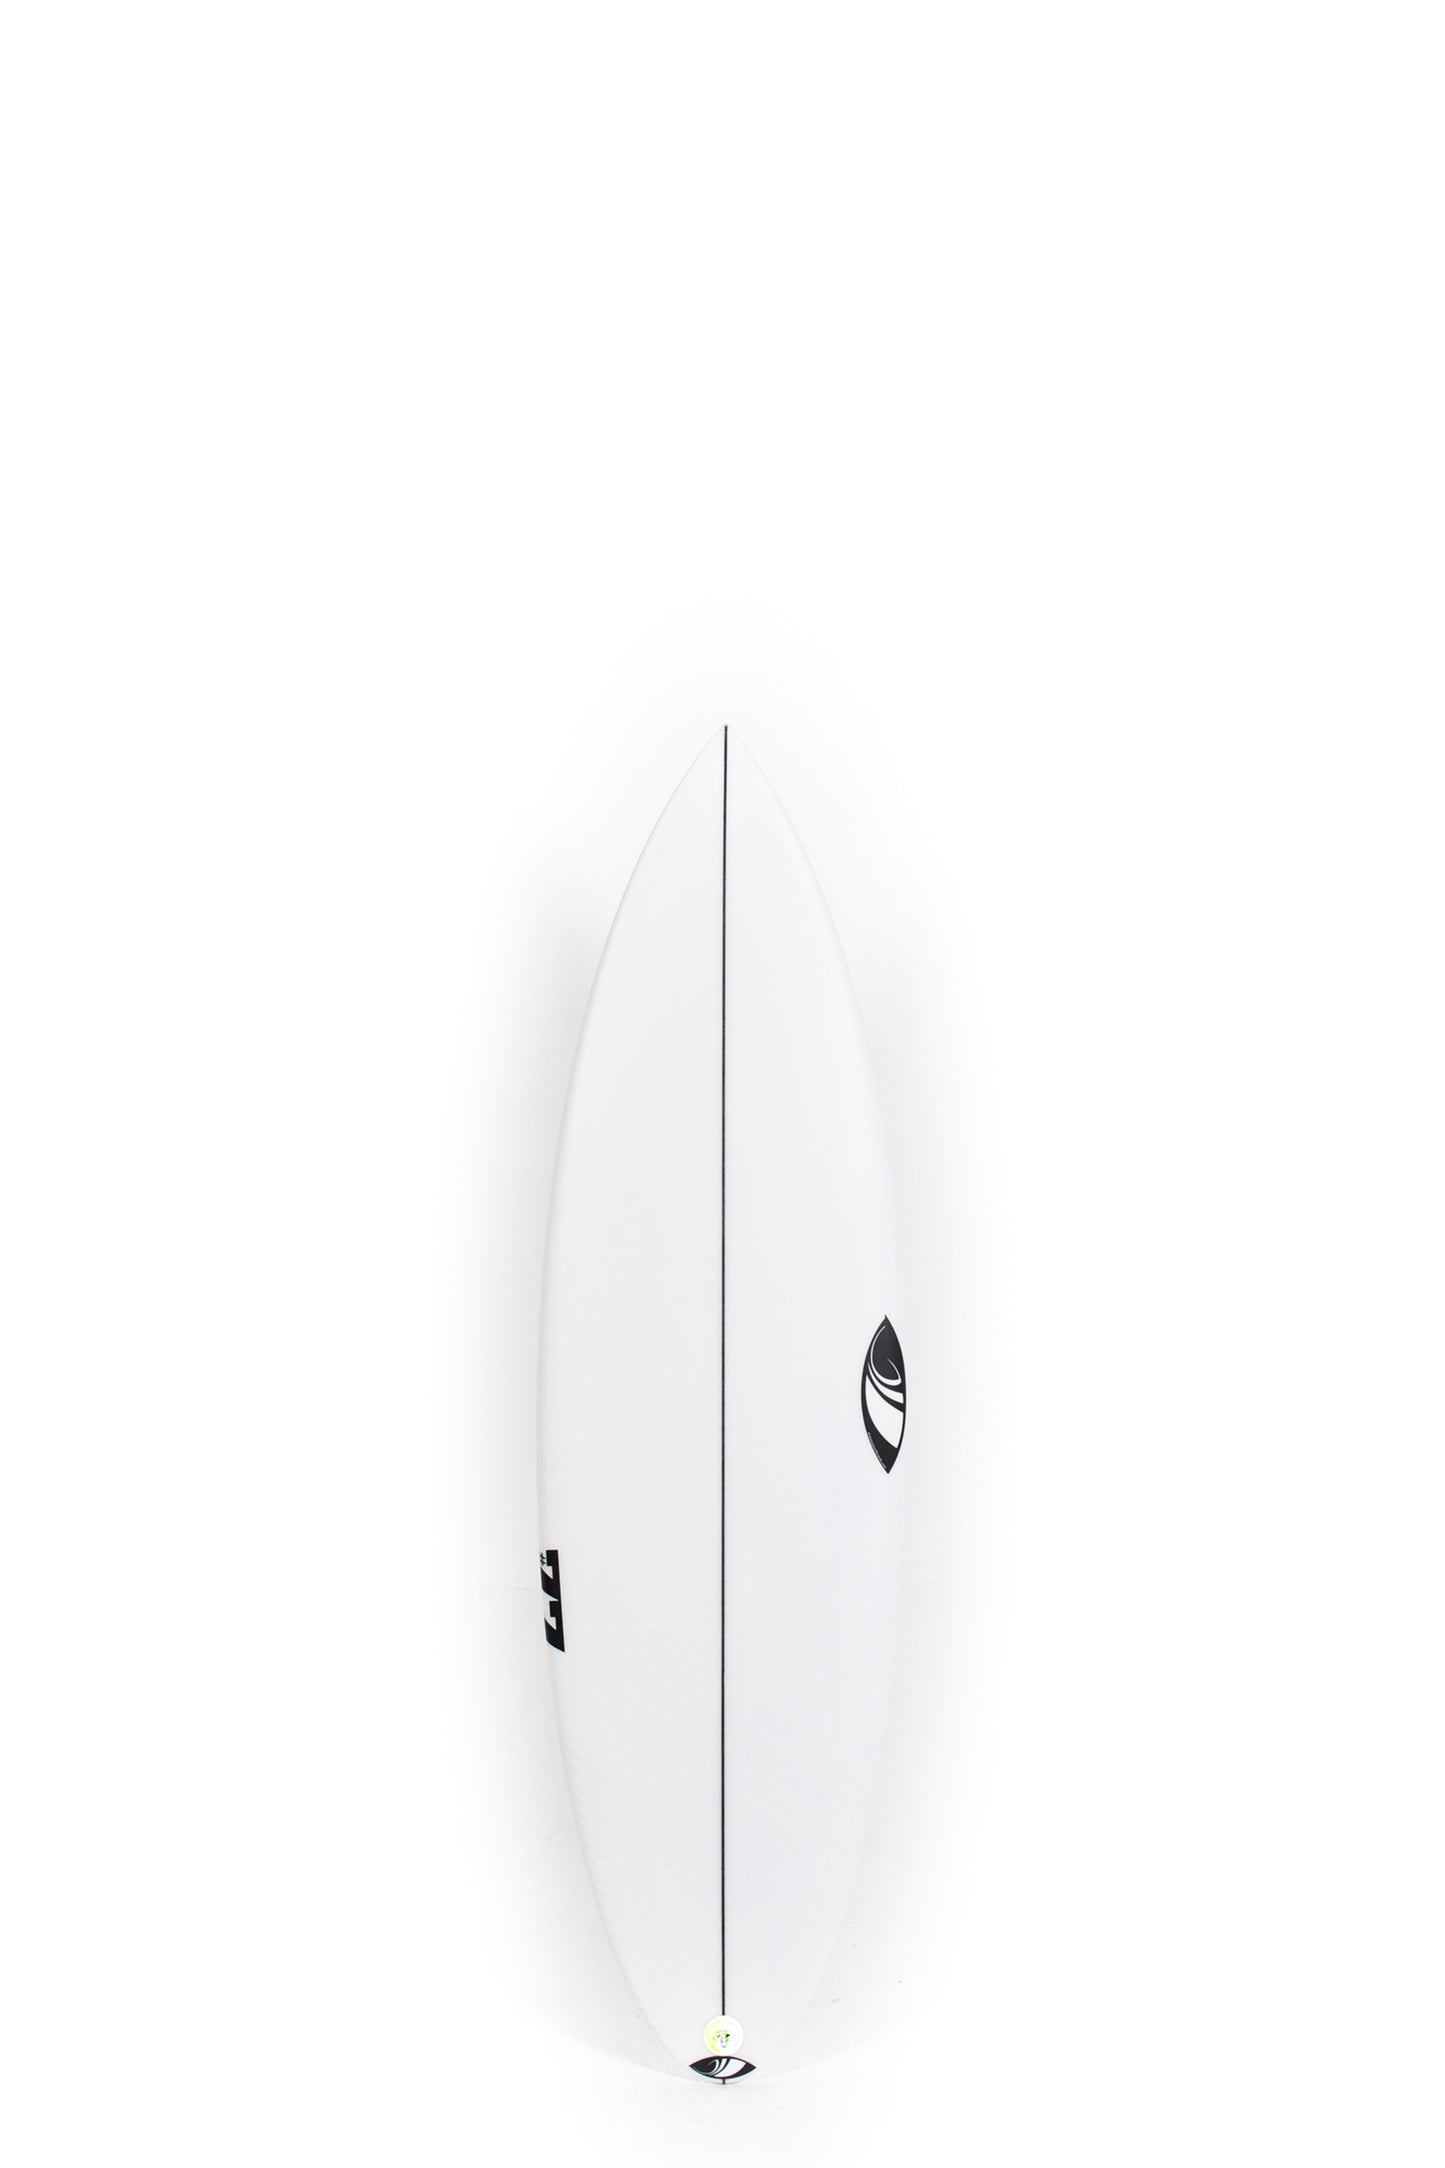 Pukas-Surf-Shop-Sharpeye-Surfboards-_77-Marcio-Zouvi-5_11